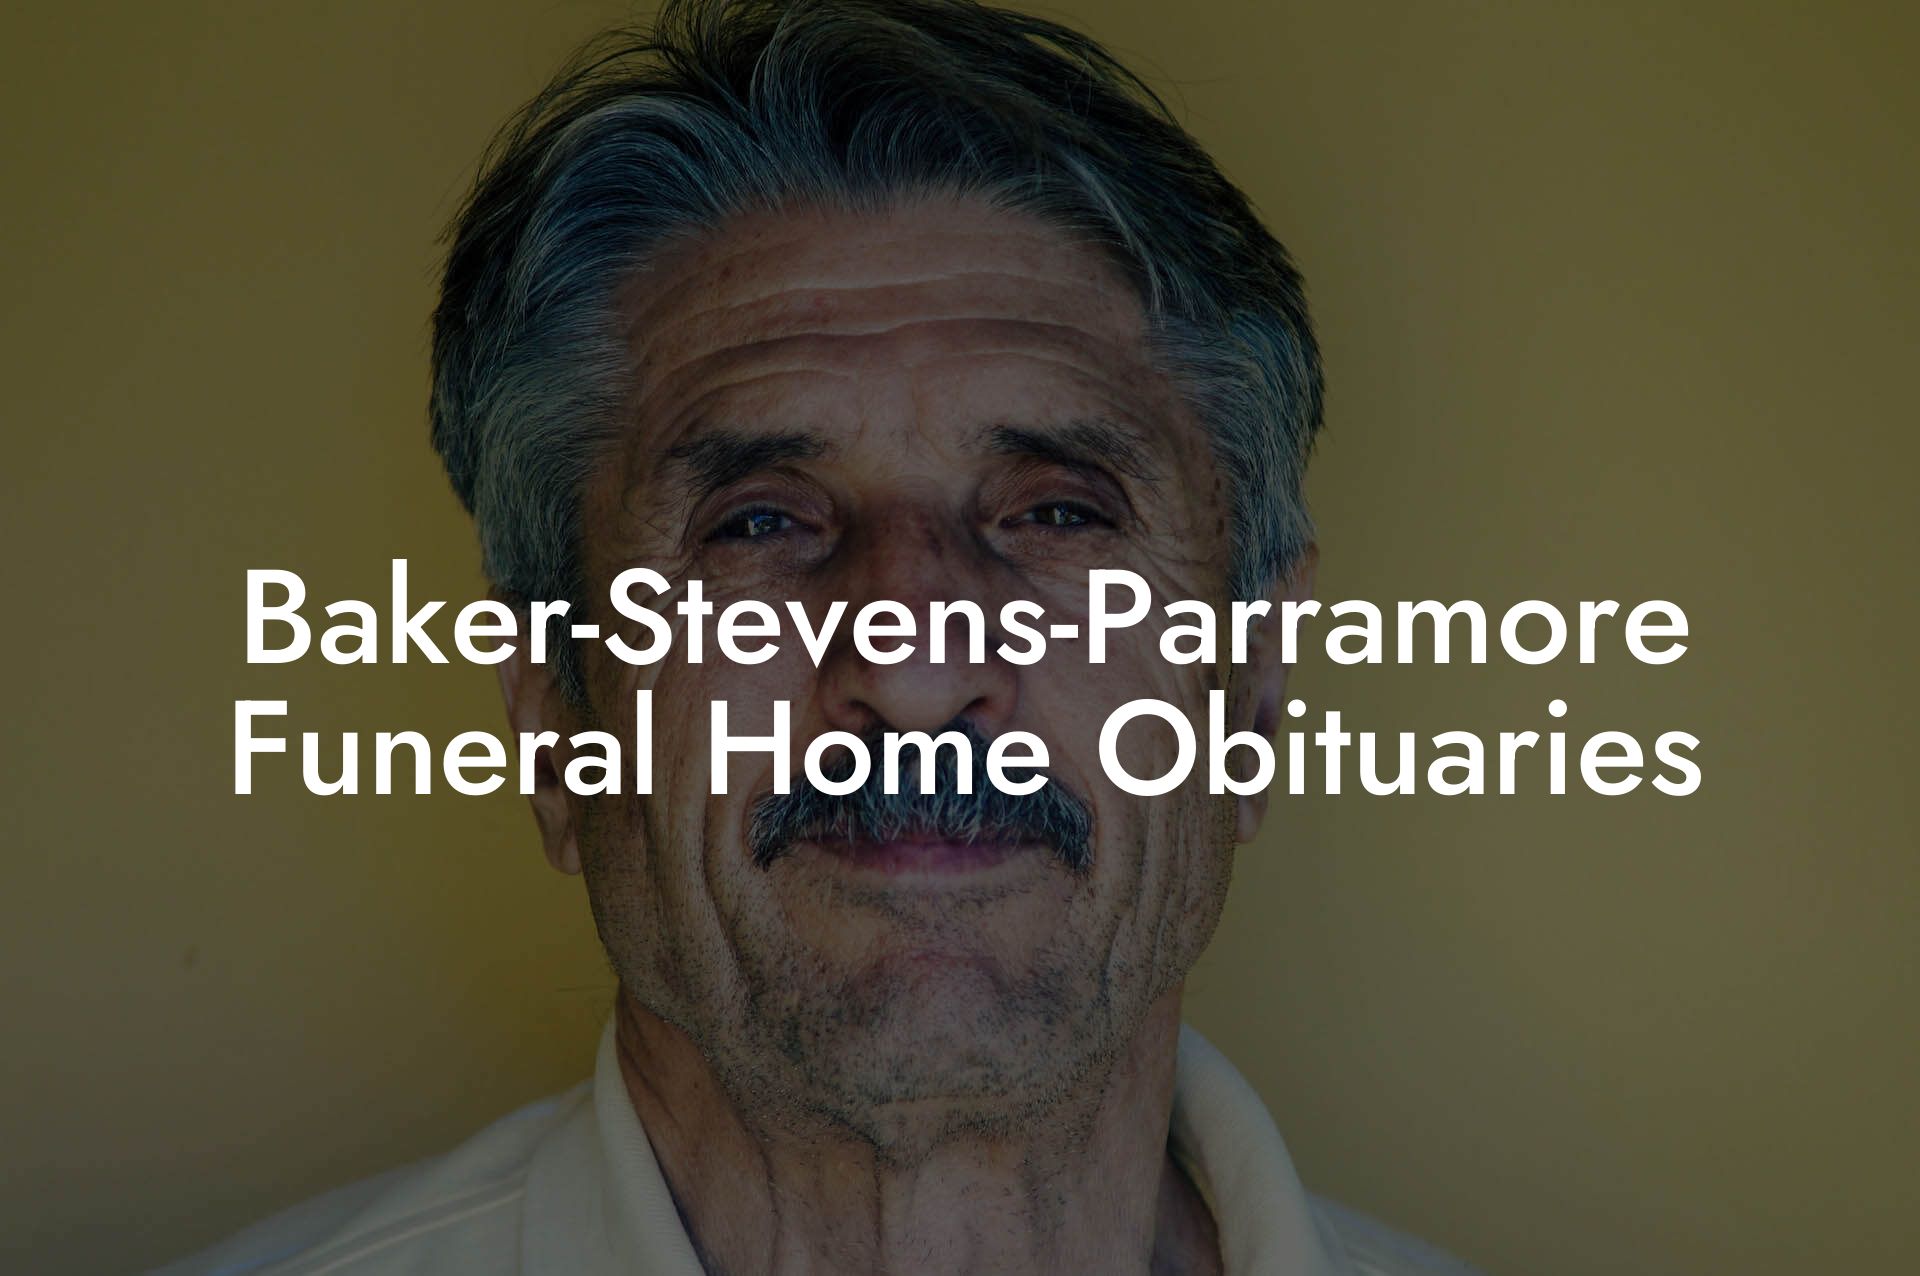 Baker-Stevens-Parramore Funeral Home Obituaries